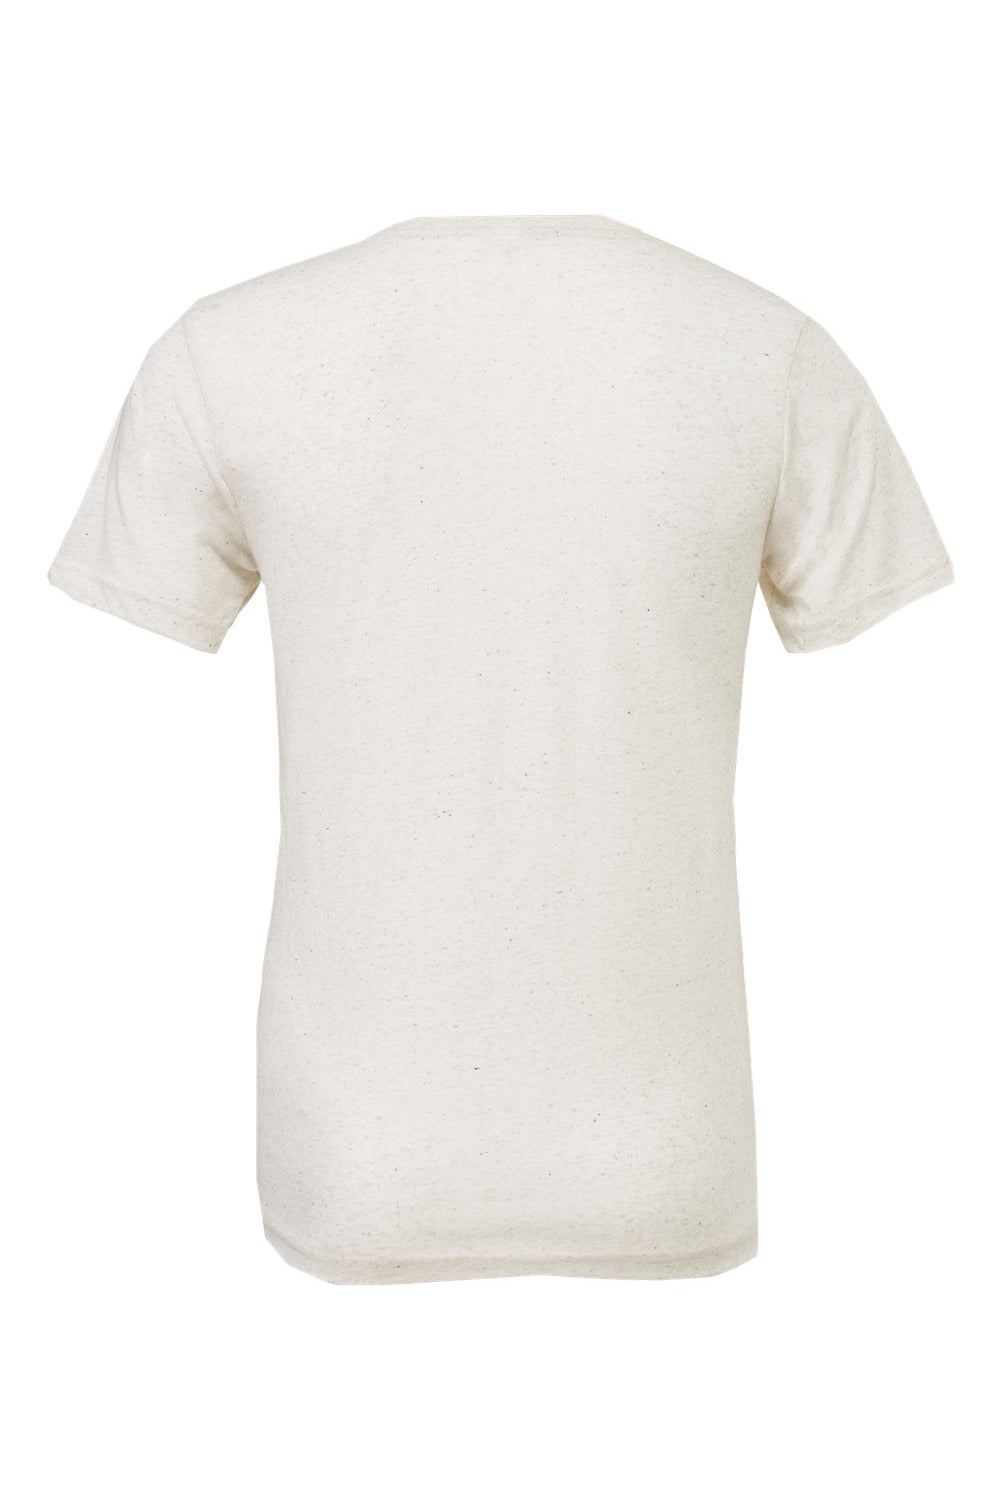 Bella + Canvas BC3415/3415C/3415 Mens Short Sleeve V-Neck T-Shirt Oatmeal Flat Back